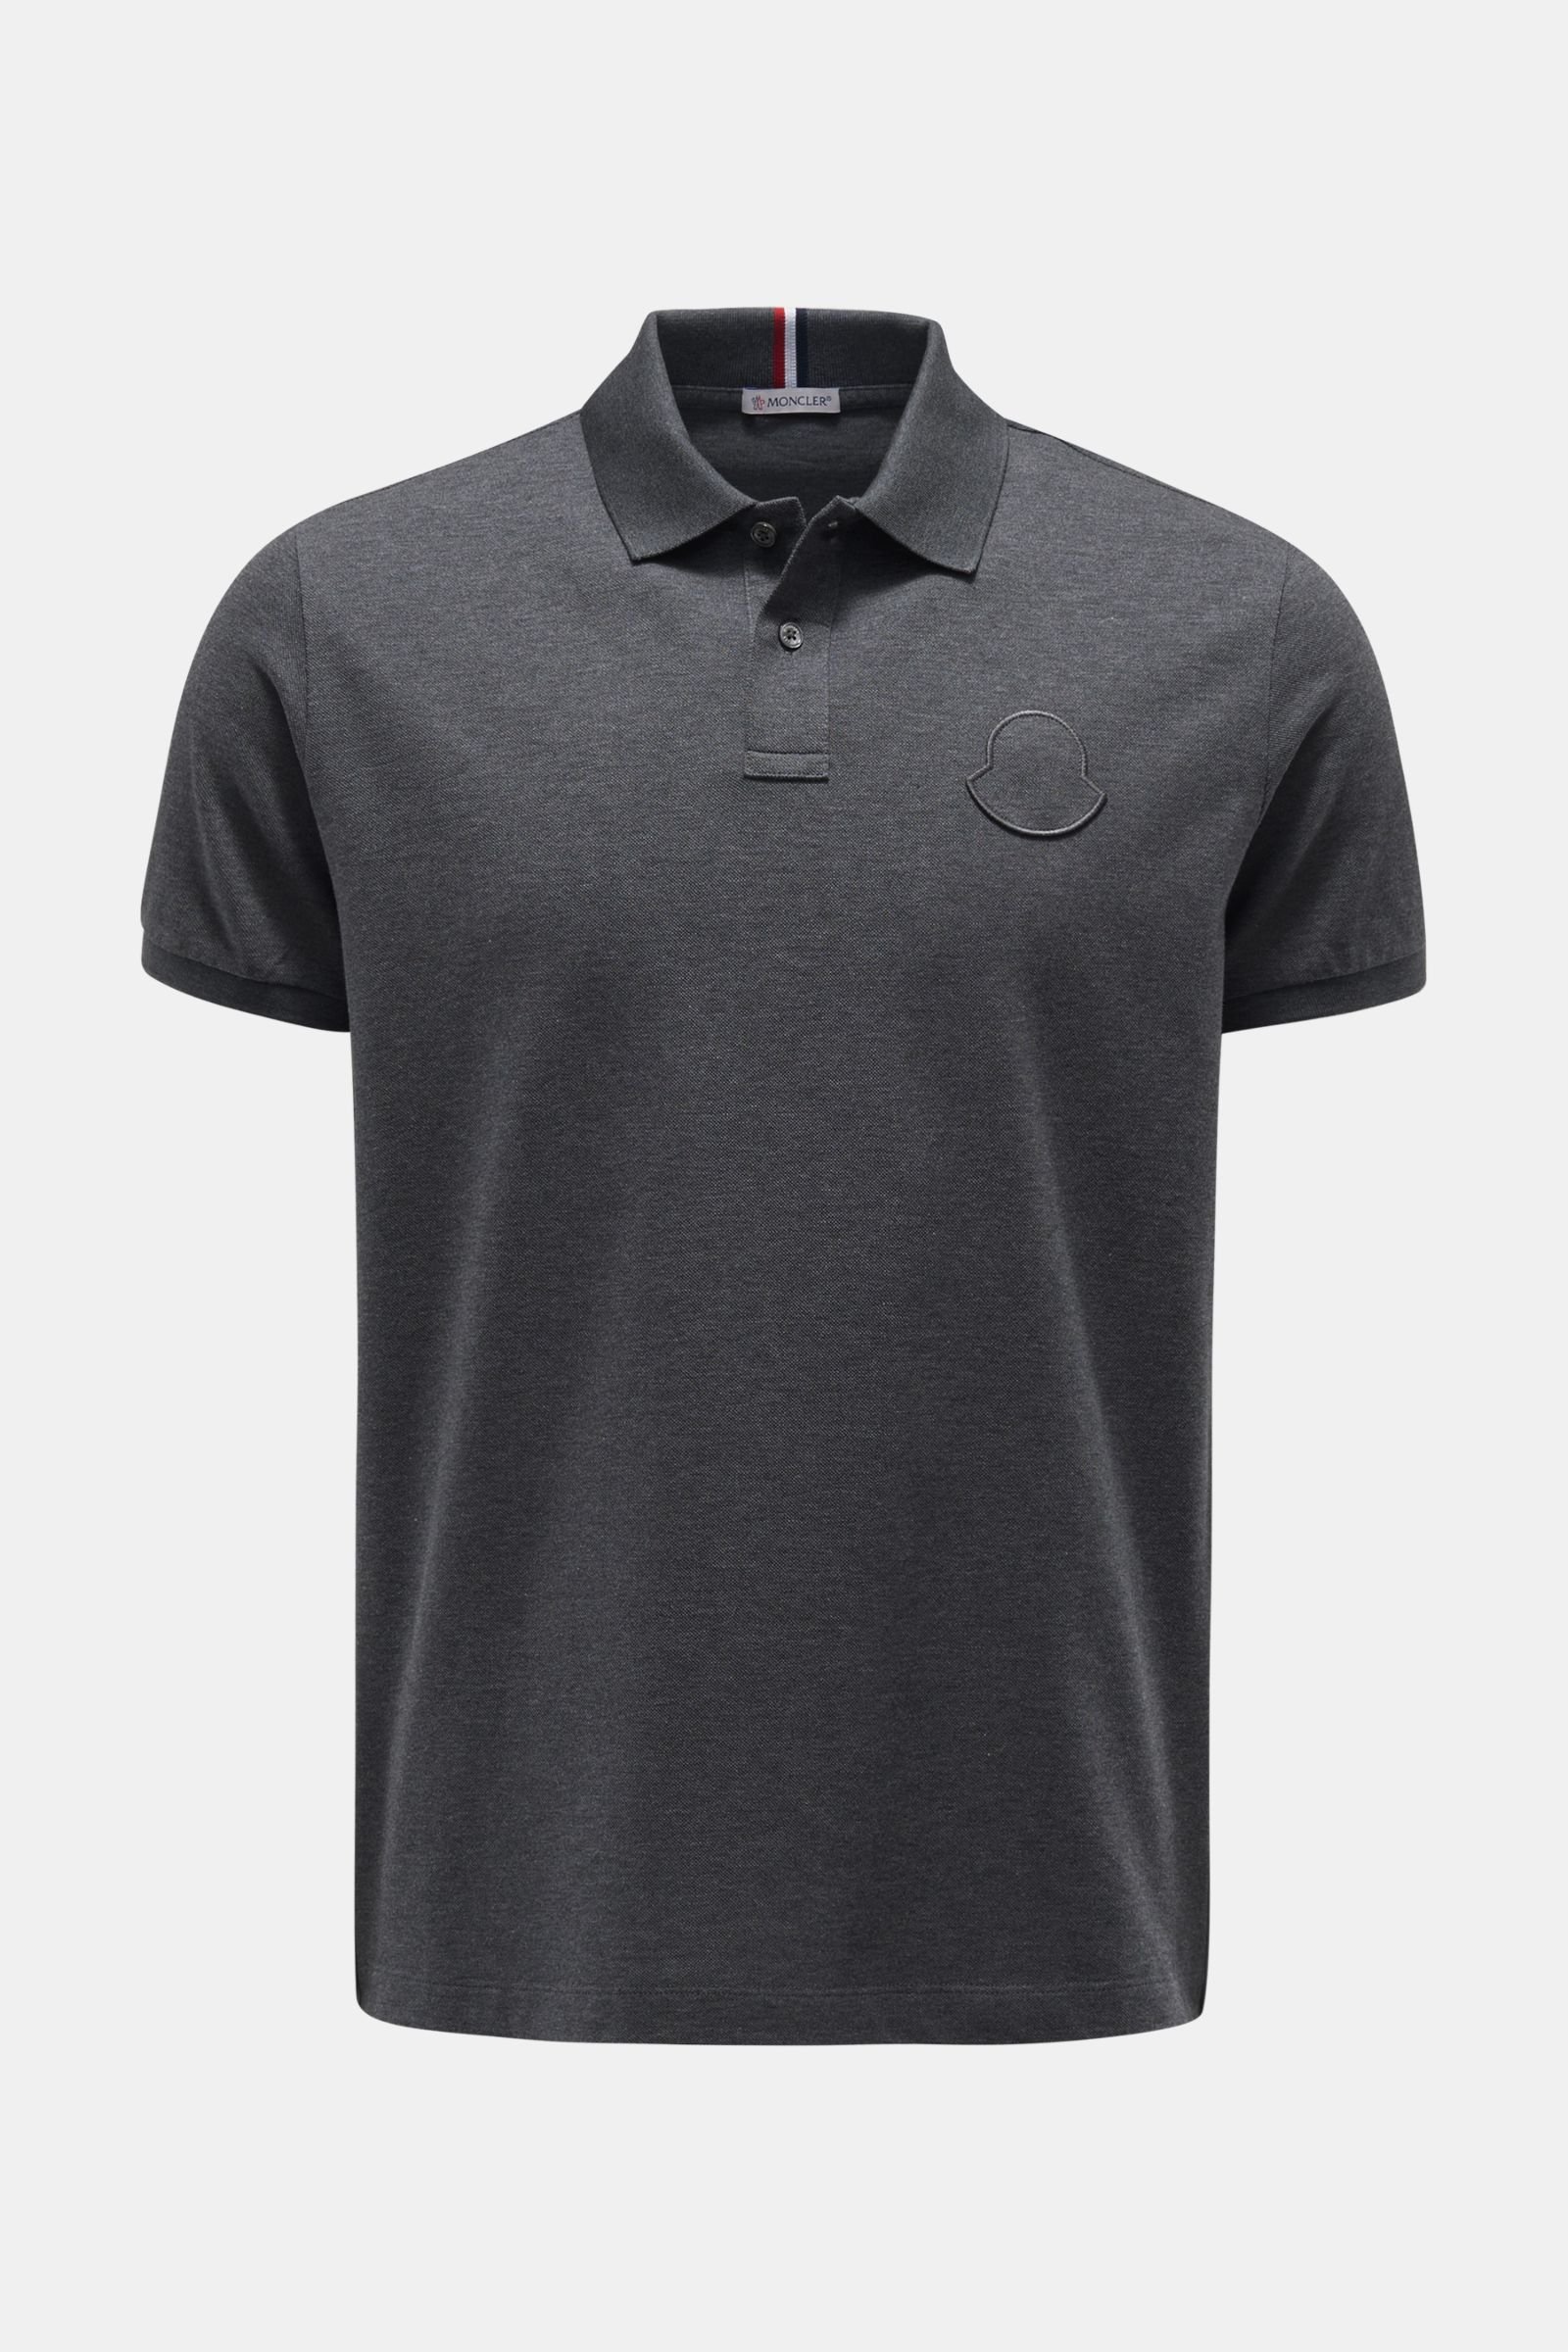 Polo shirt dark grey 